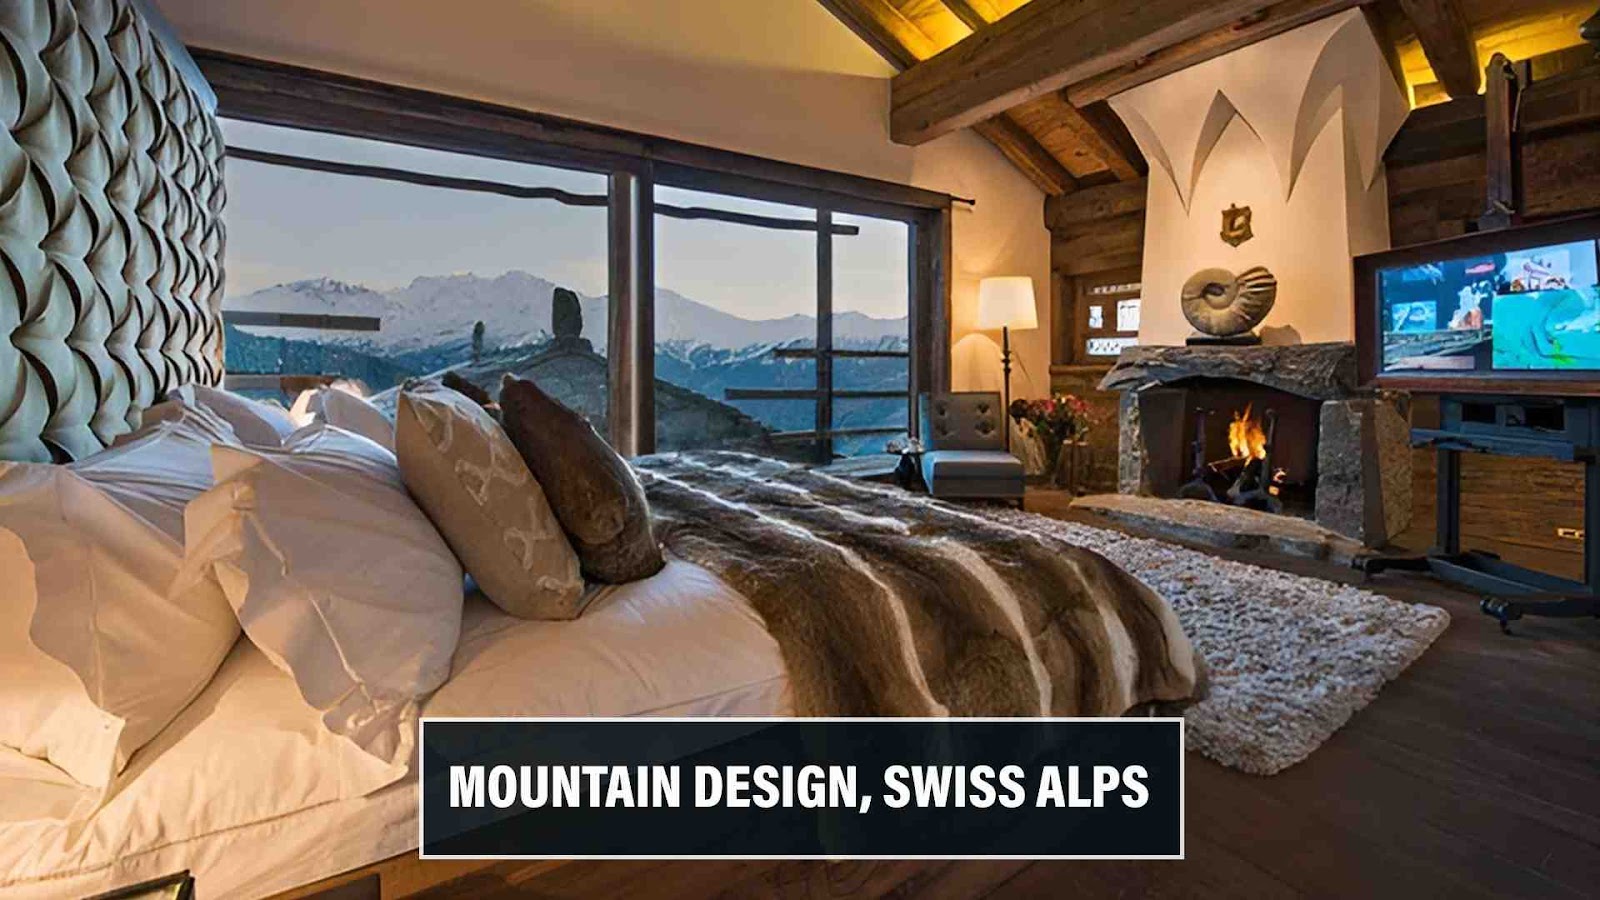 Mountain Design, Swiss Alps: